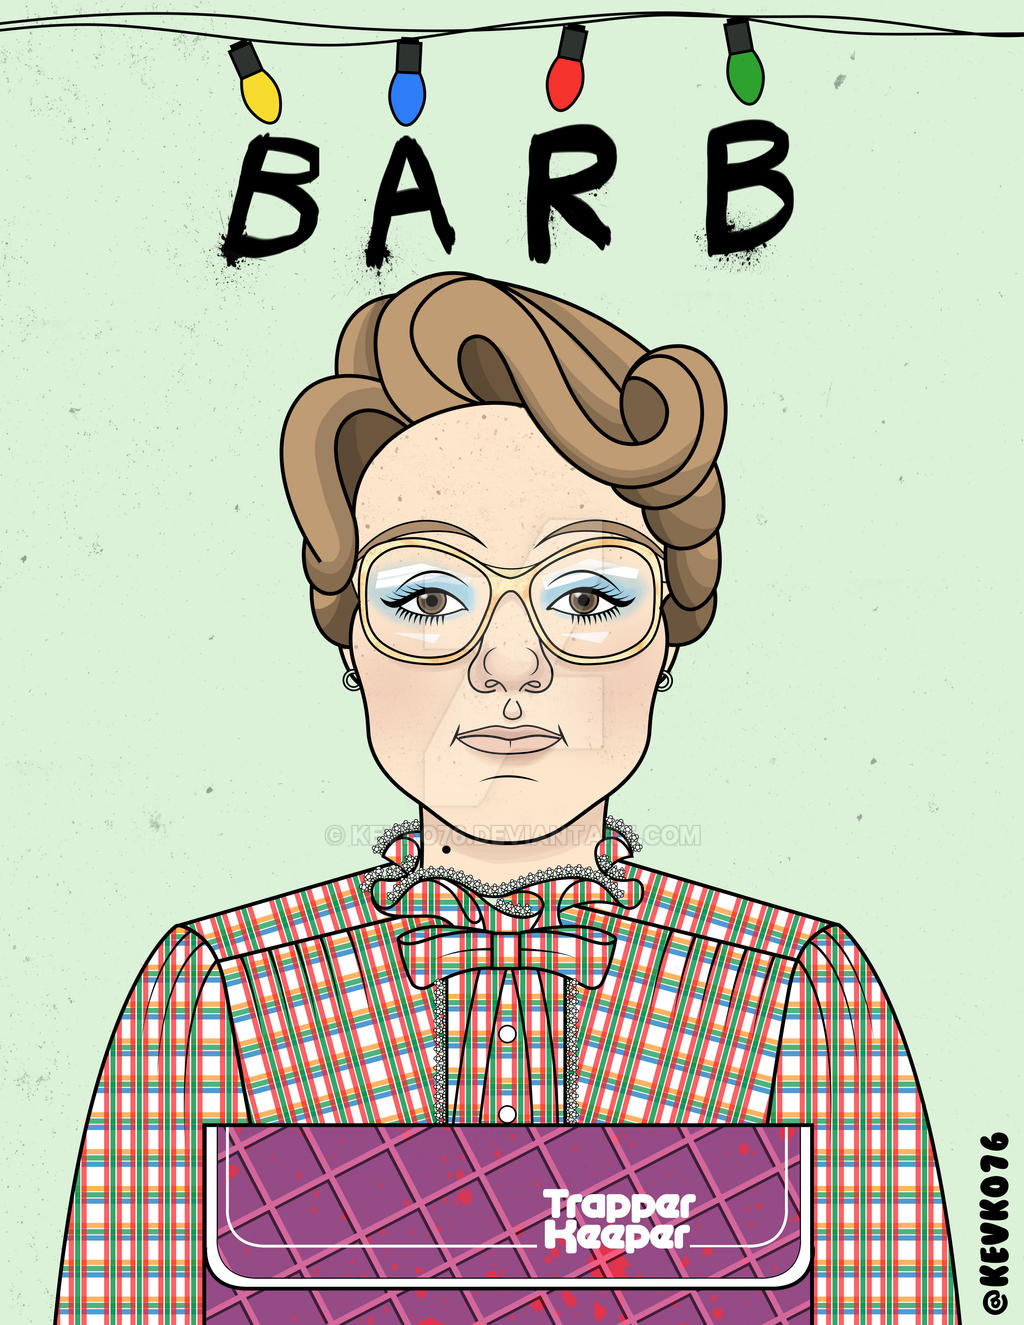 Barb - Stranger Things by TheSparklePenguin on DeviantArt